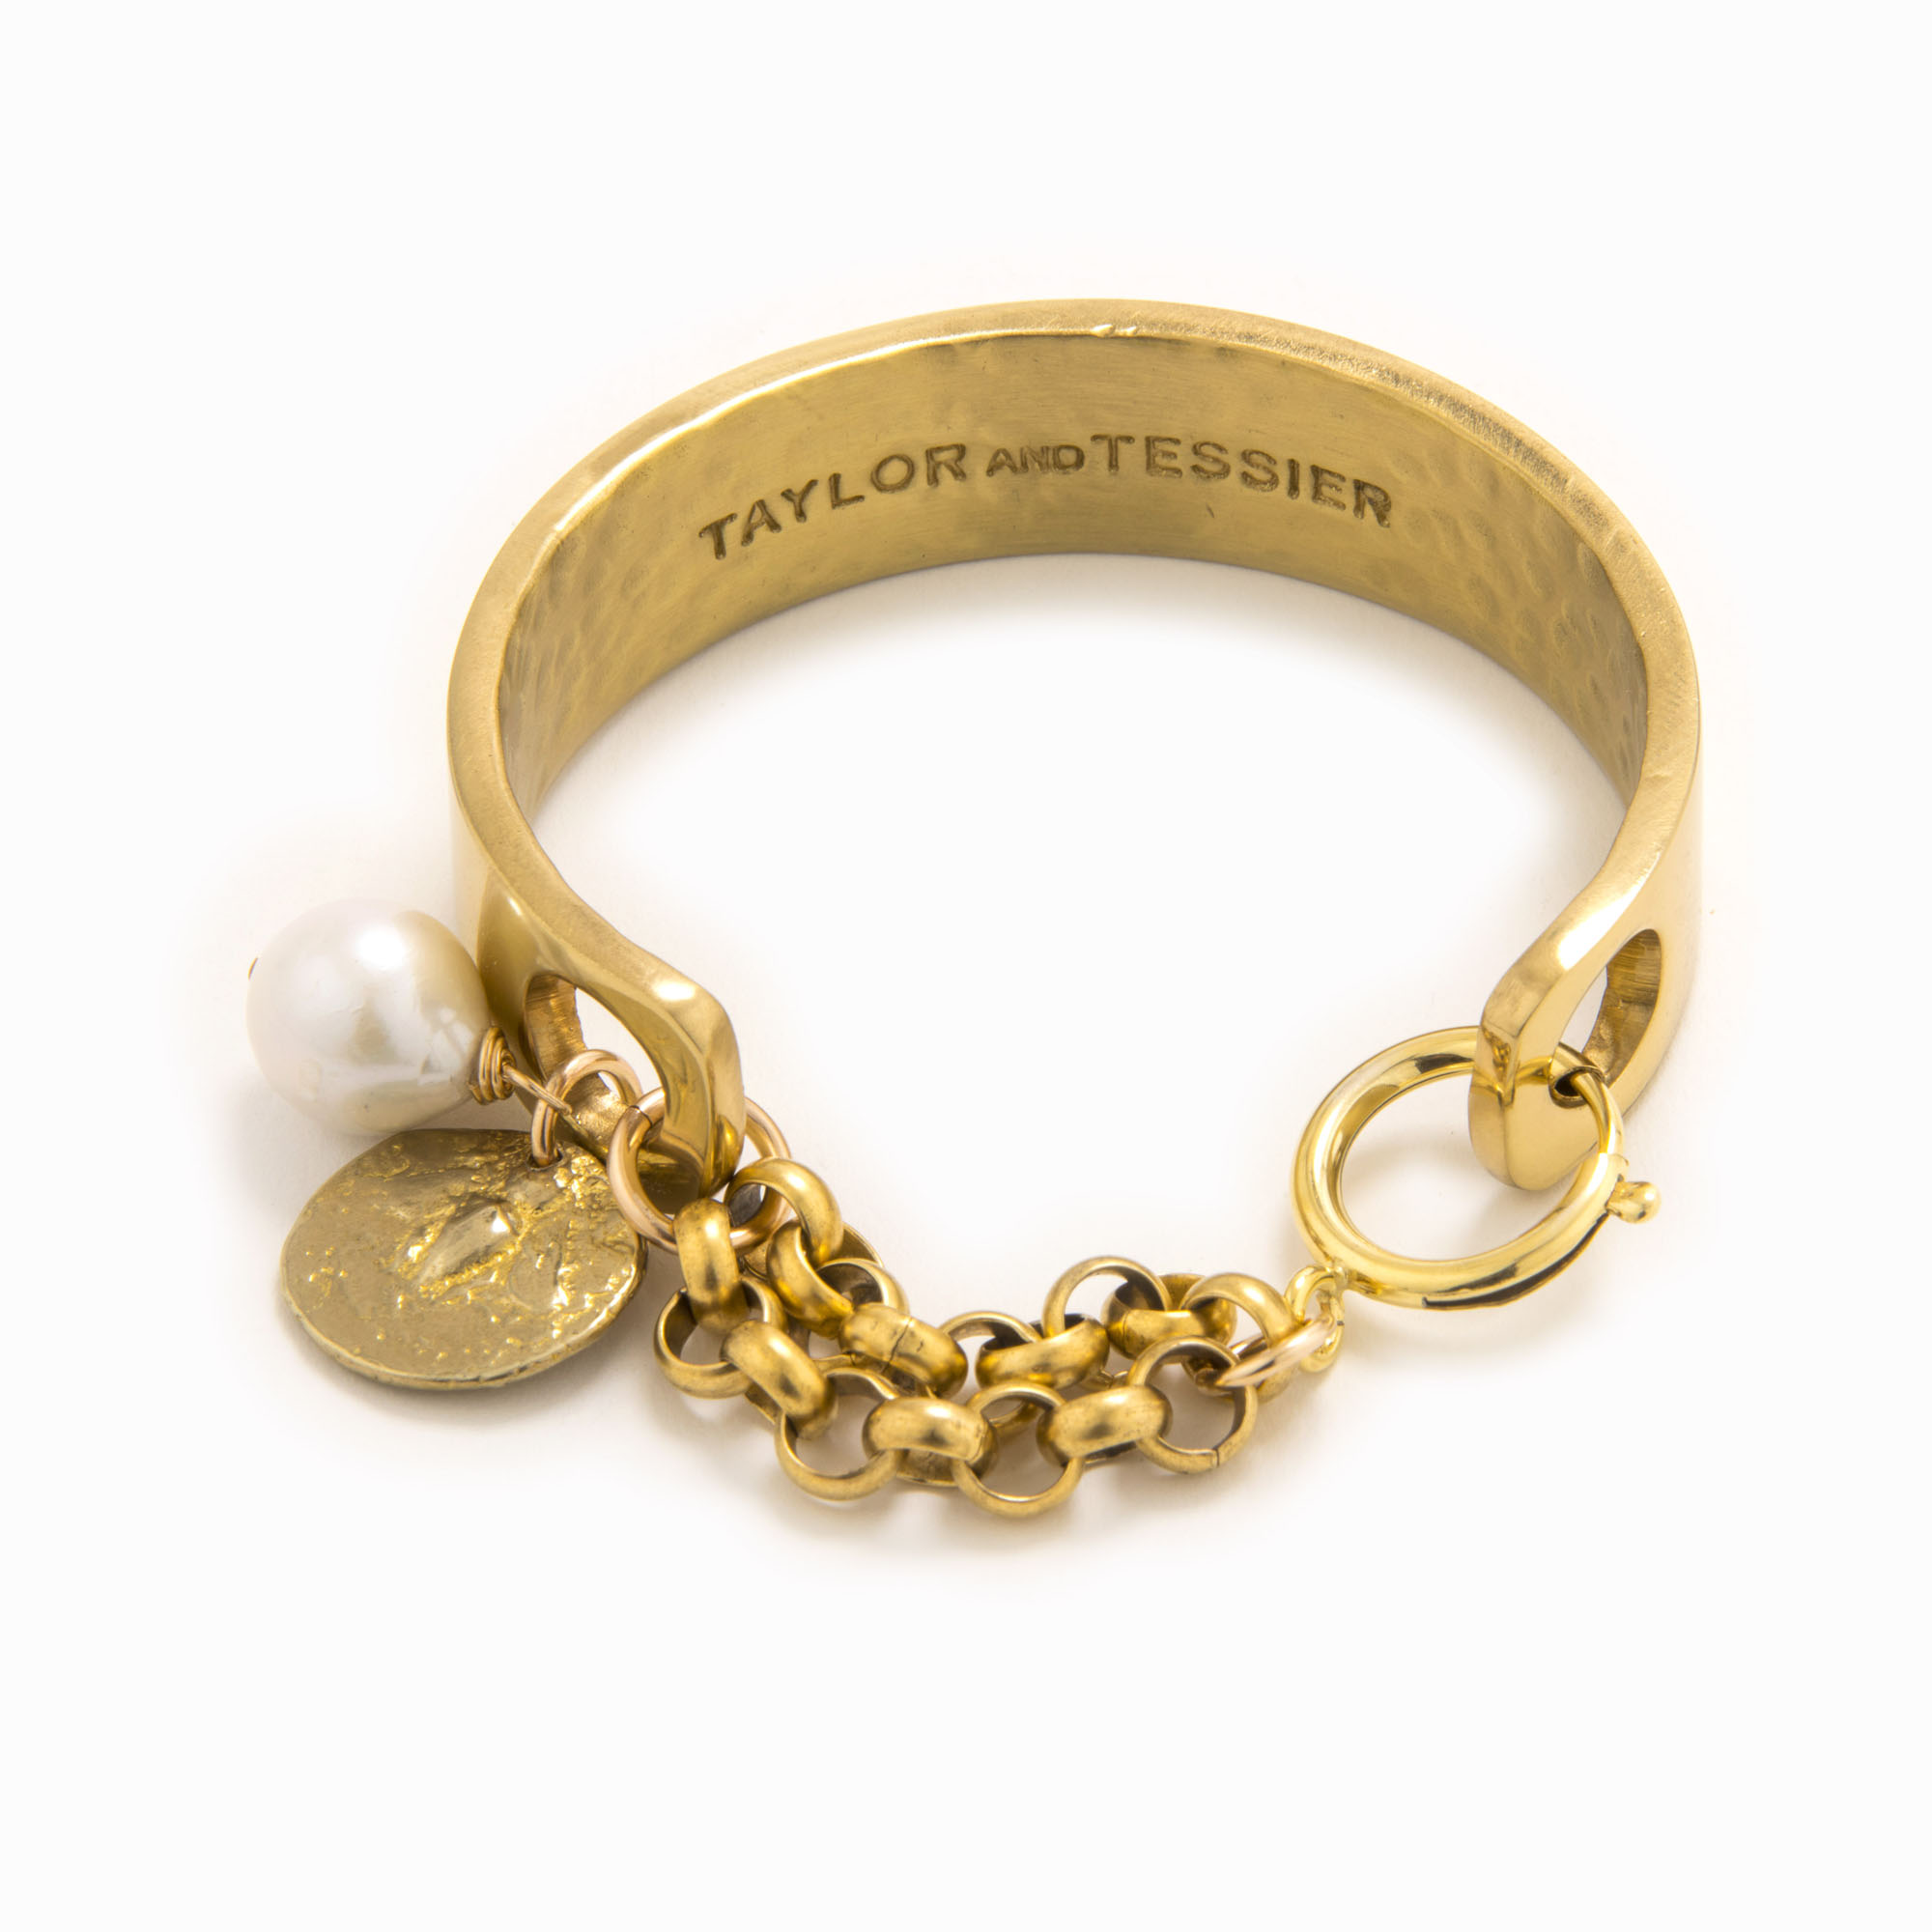 Featured image for “Nova Brass Bracelet”